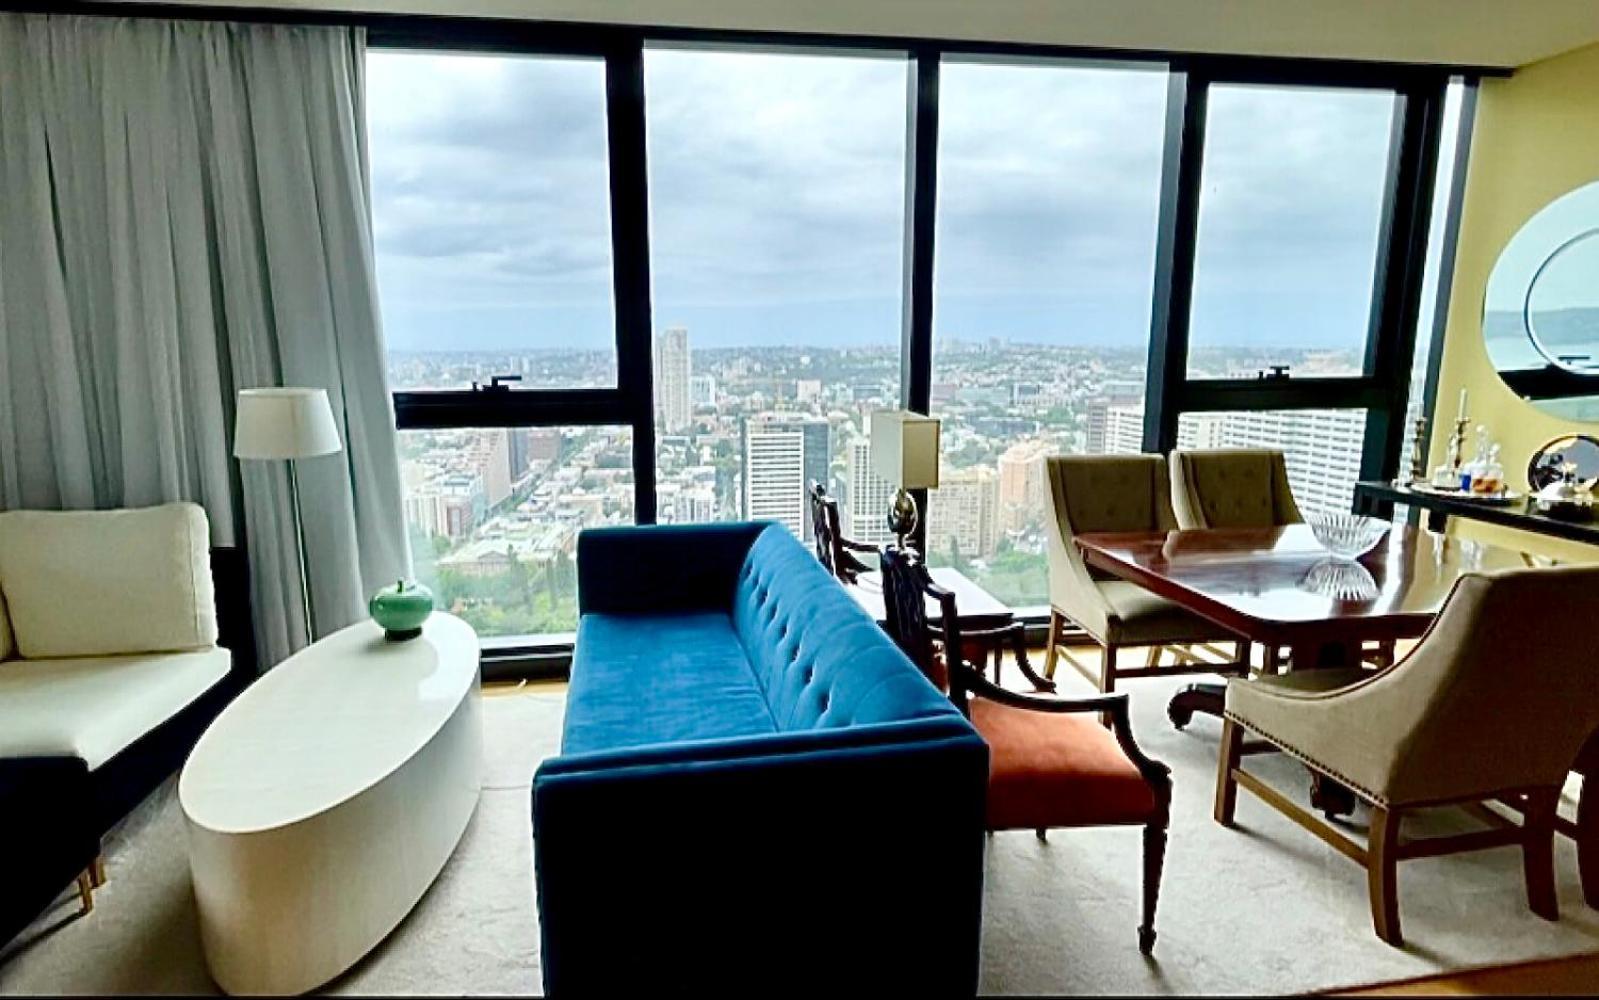 Sydney Cosmopolitan Cbd Apartment Exterior photo